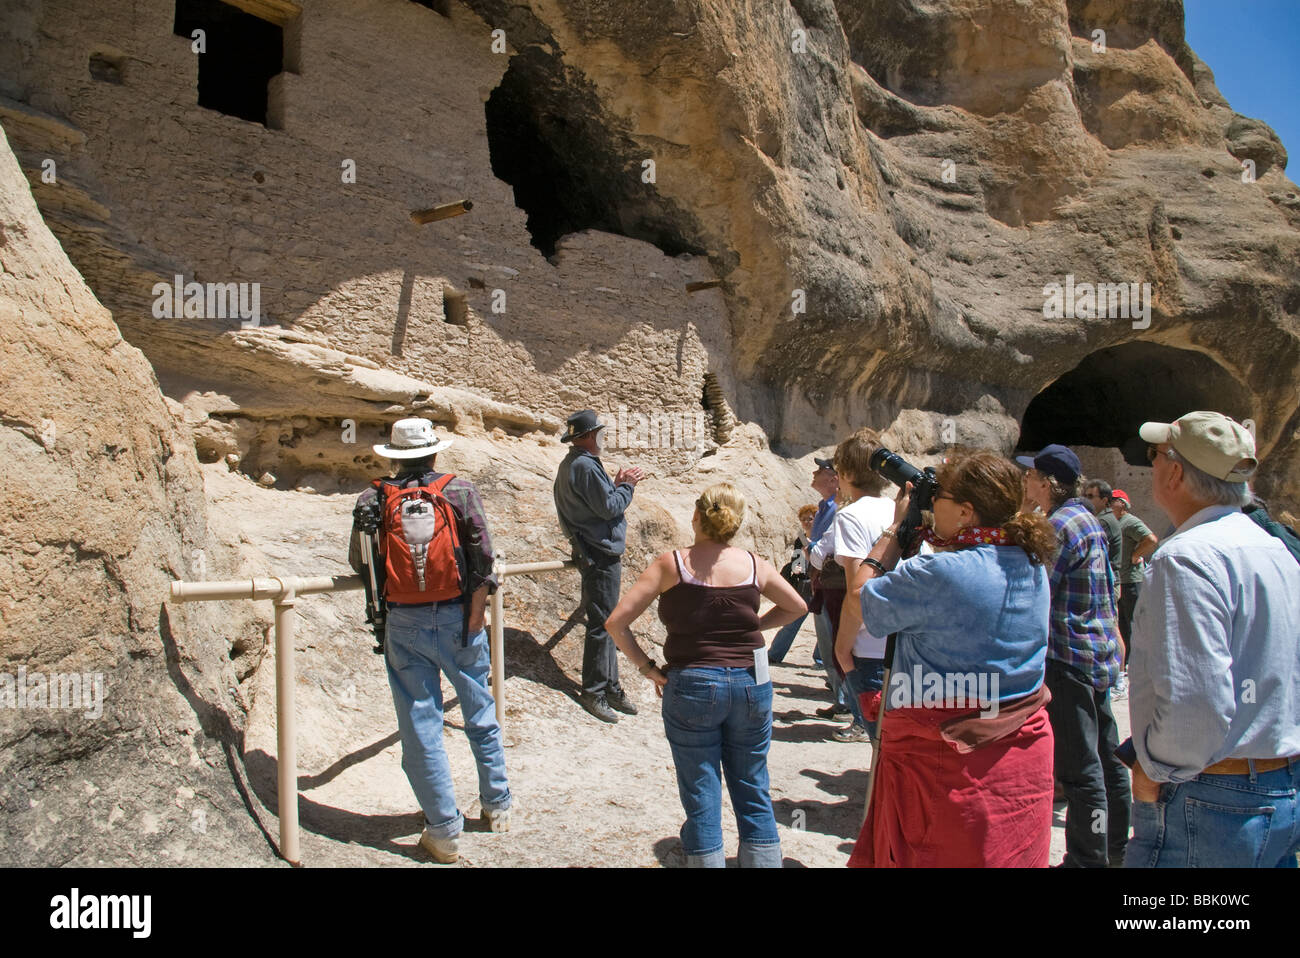 Stati Uniti d'America New Mexico Gila Cliff Dwellings National Monument guida turistica raccontando abou Cliff strutture di abitazione in grotte naturali in c Foto Stock